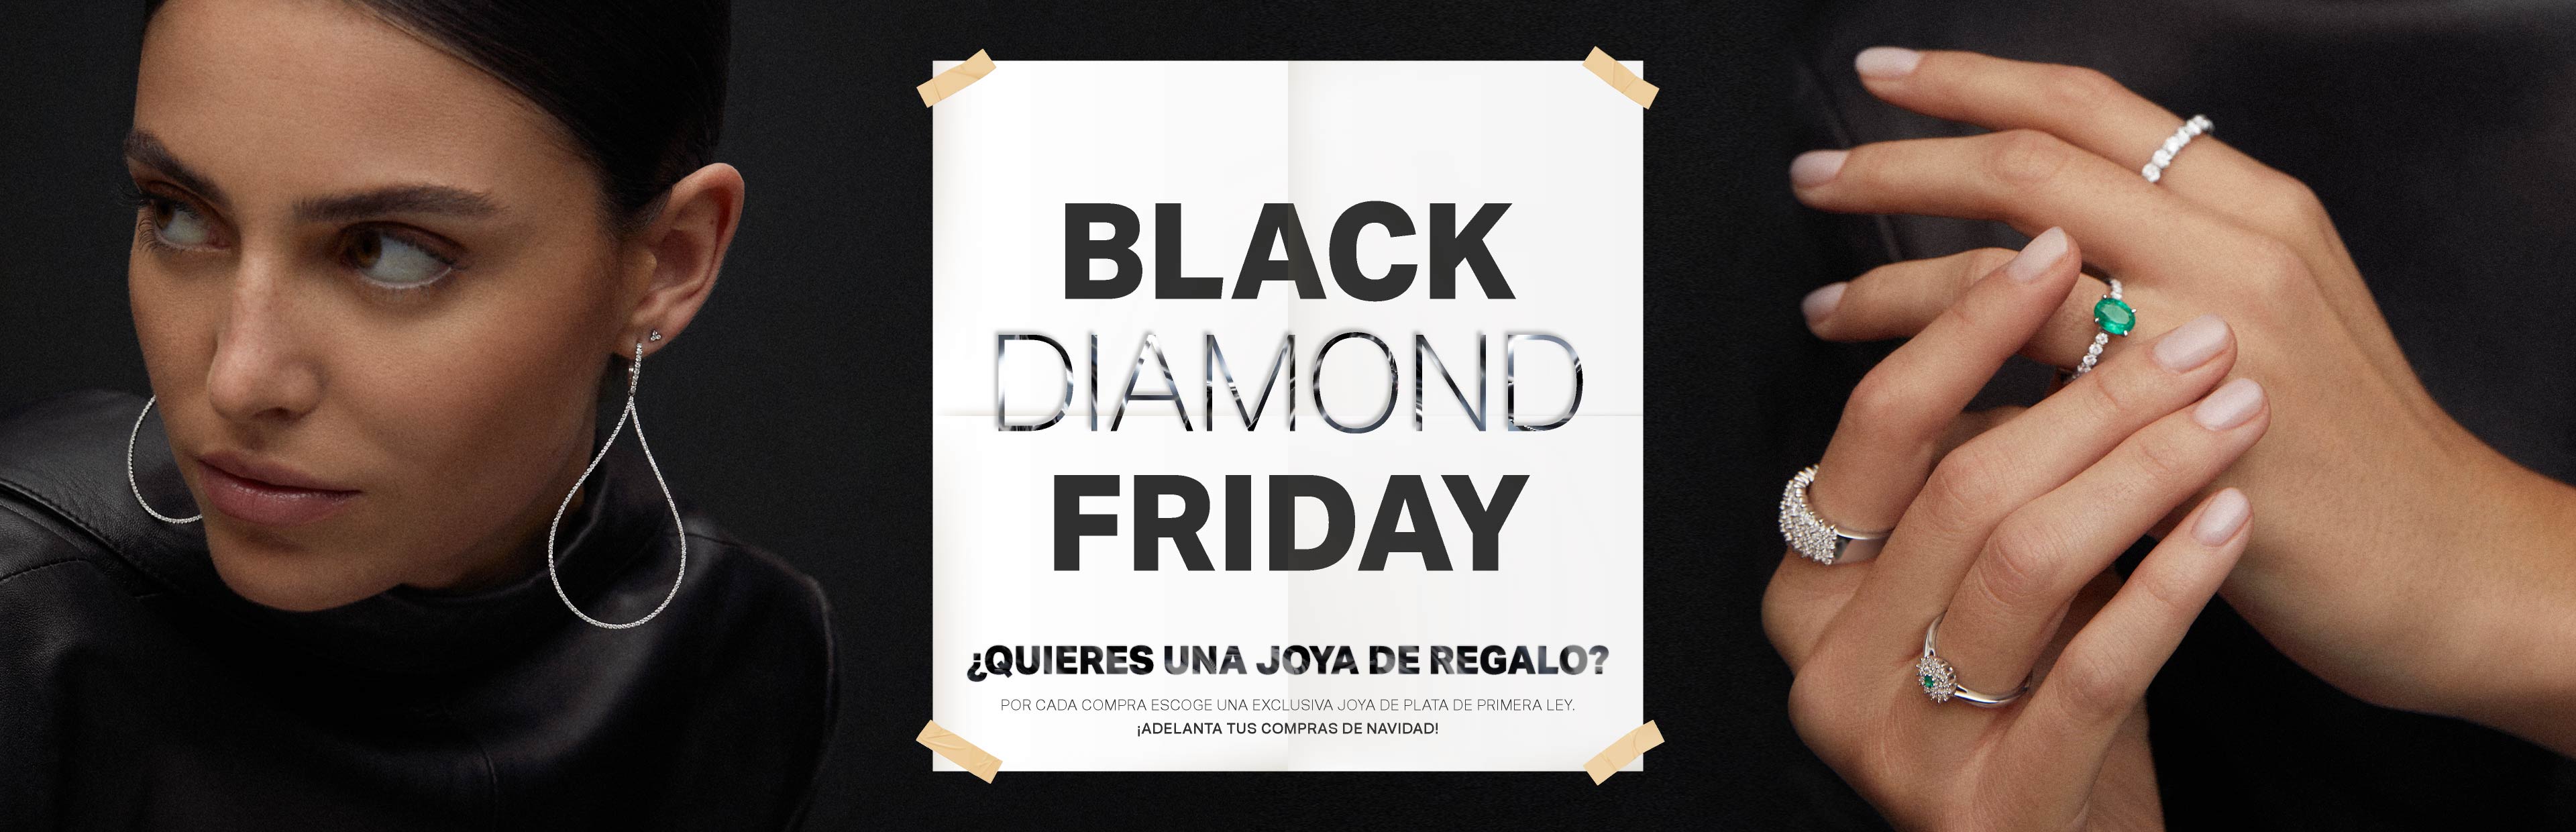 Black Diamond Friday